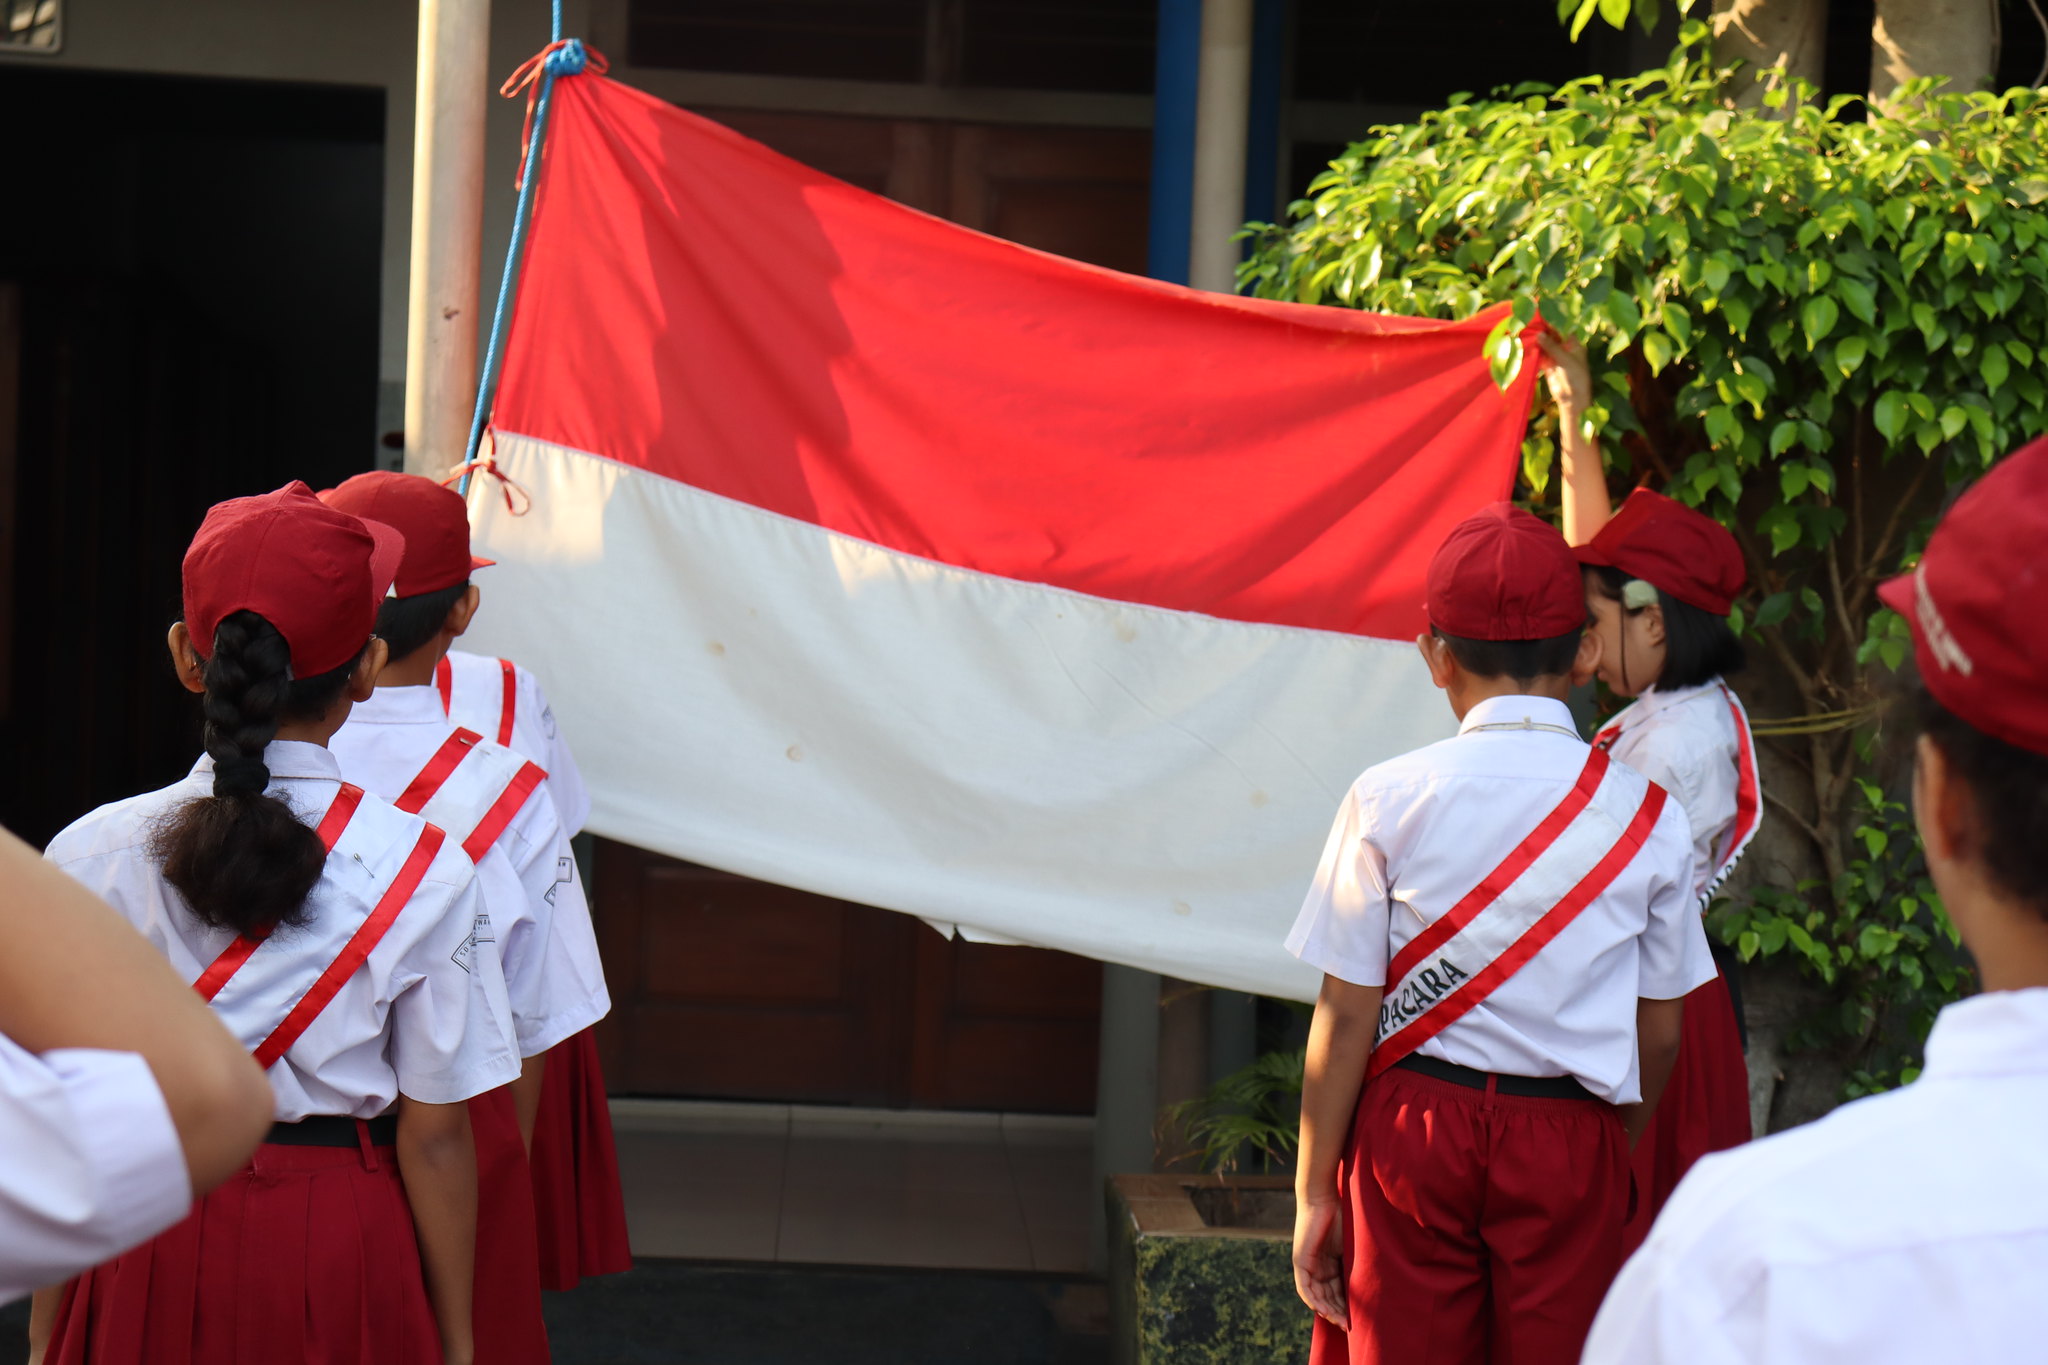 Sumpah Pemuda 2023 “Bersatu Memajukan Indonesia”